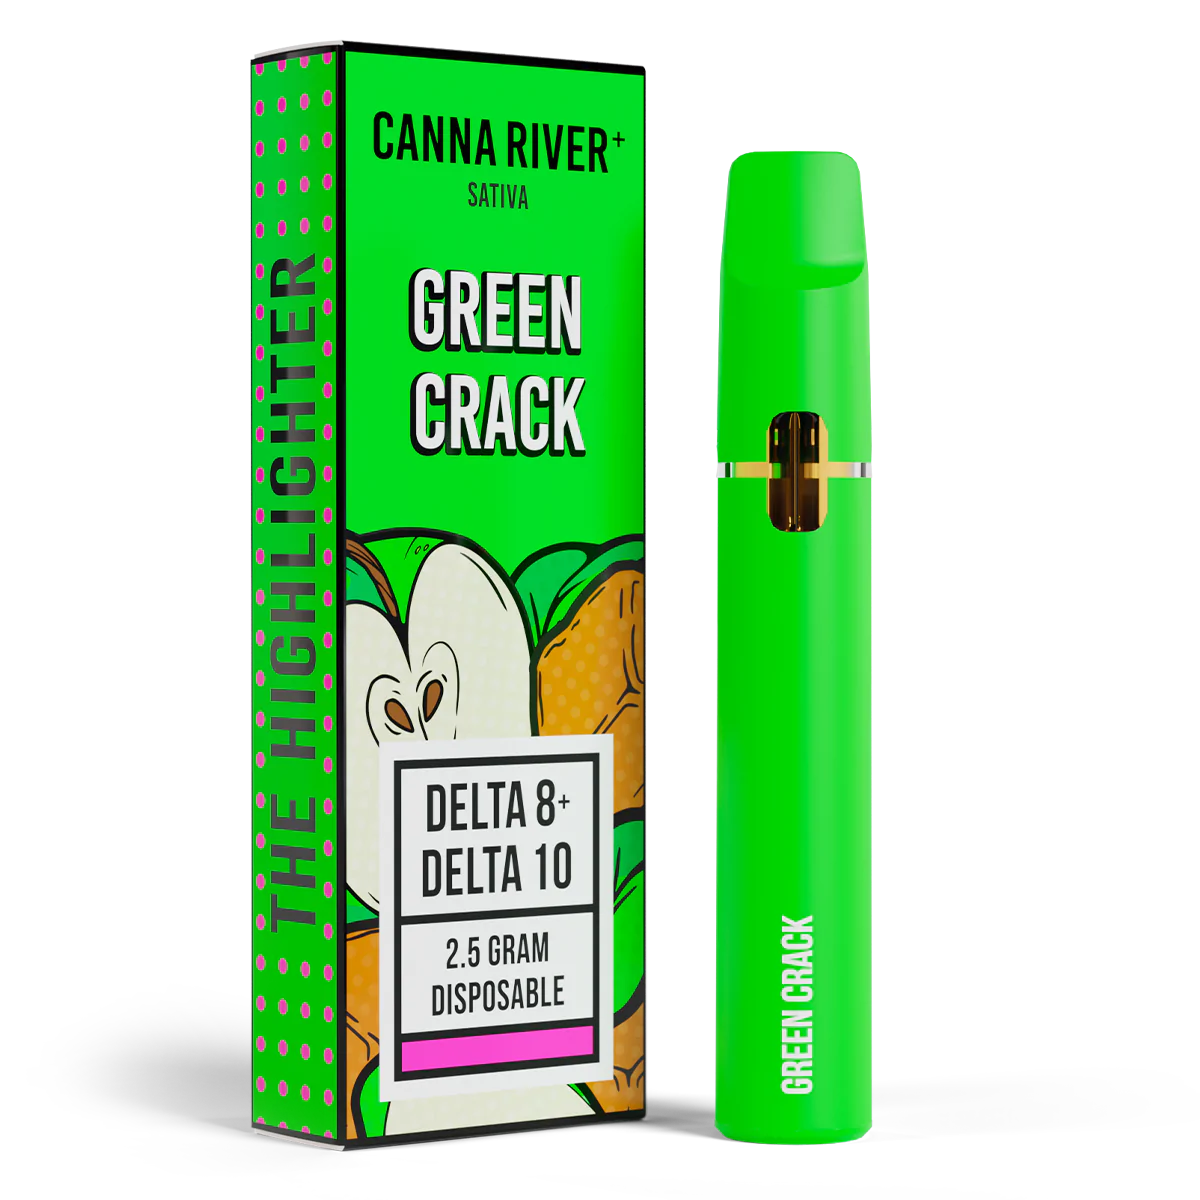 Canna River - Highlighter - Delta 8 - Delta 10 -Disposable - Green Crack - 2.5G - Burning Daily